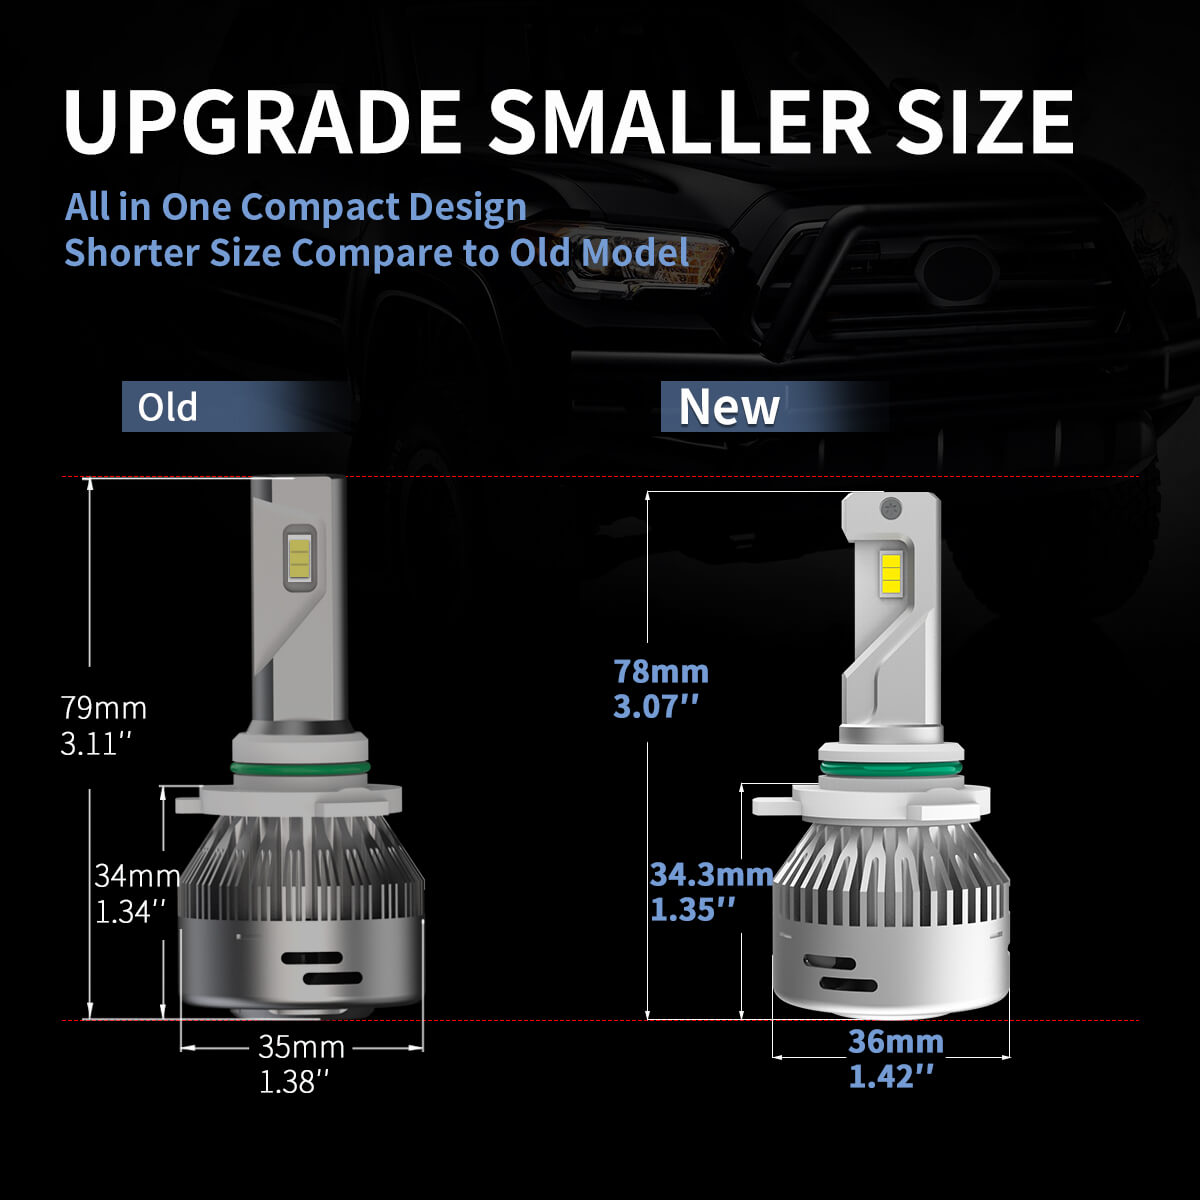 9012 HIR2 LED Headlight Conversion Kit High Low Dual Beam Light Bulbs  6000LM 2X